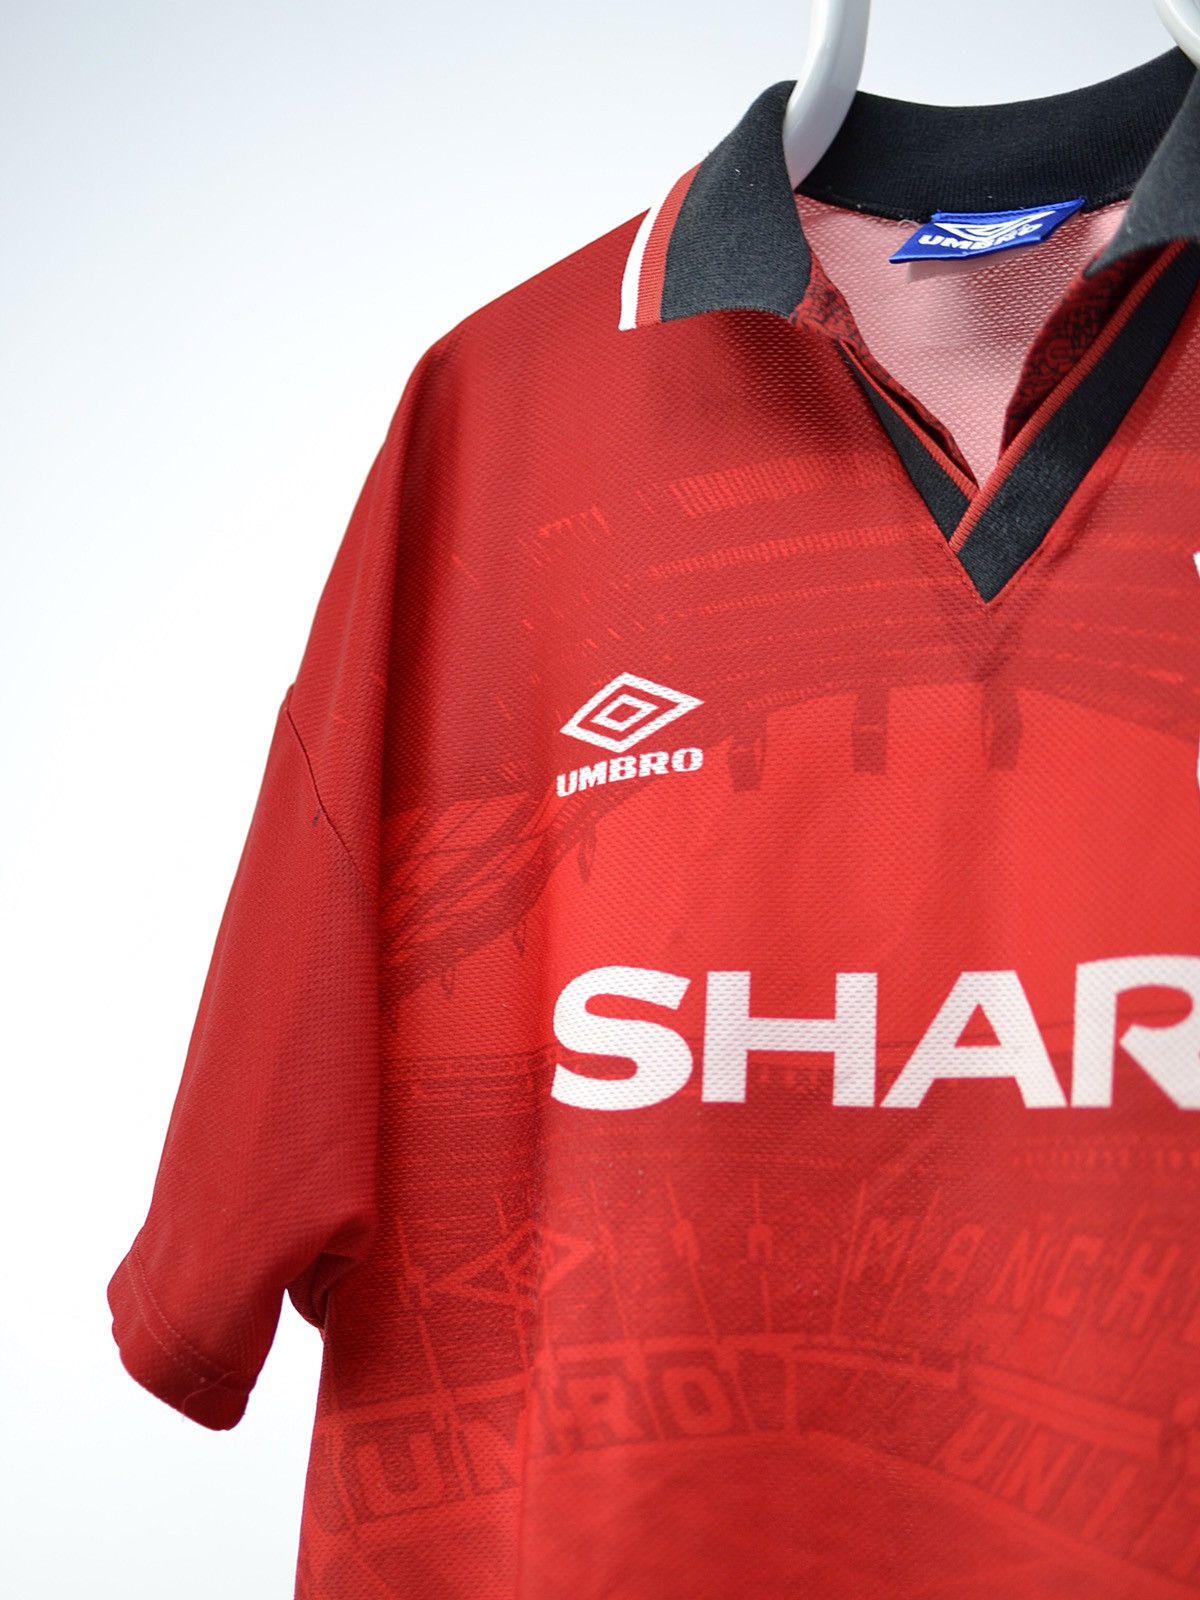 Umbro Vintage Manchester United Umbro Sharp Jersey Shirt 94/95 L Size US L / EU 52-54 / 3 - 5 Thumbnail